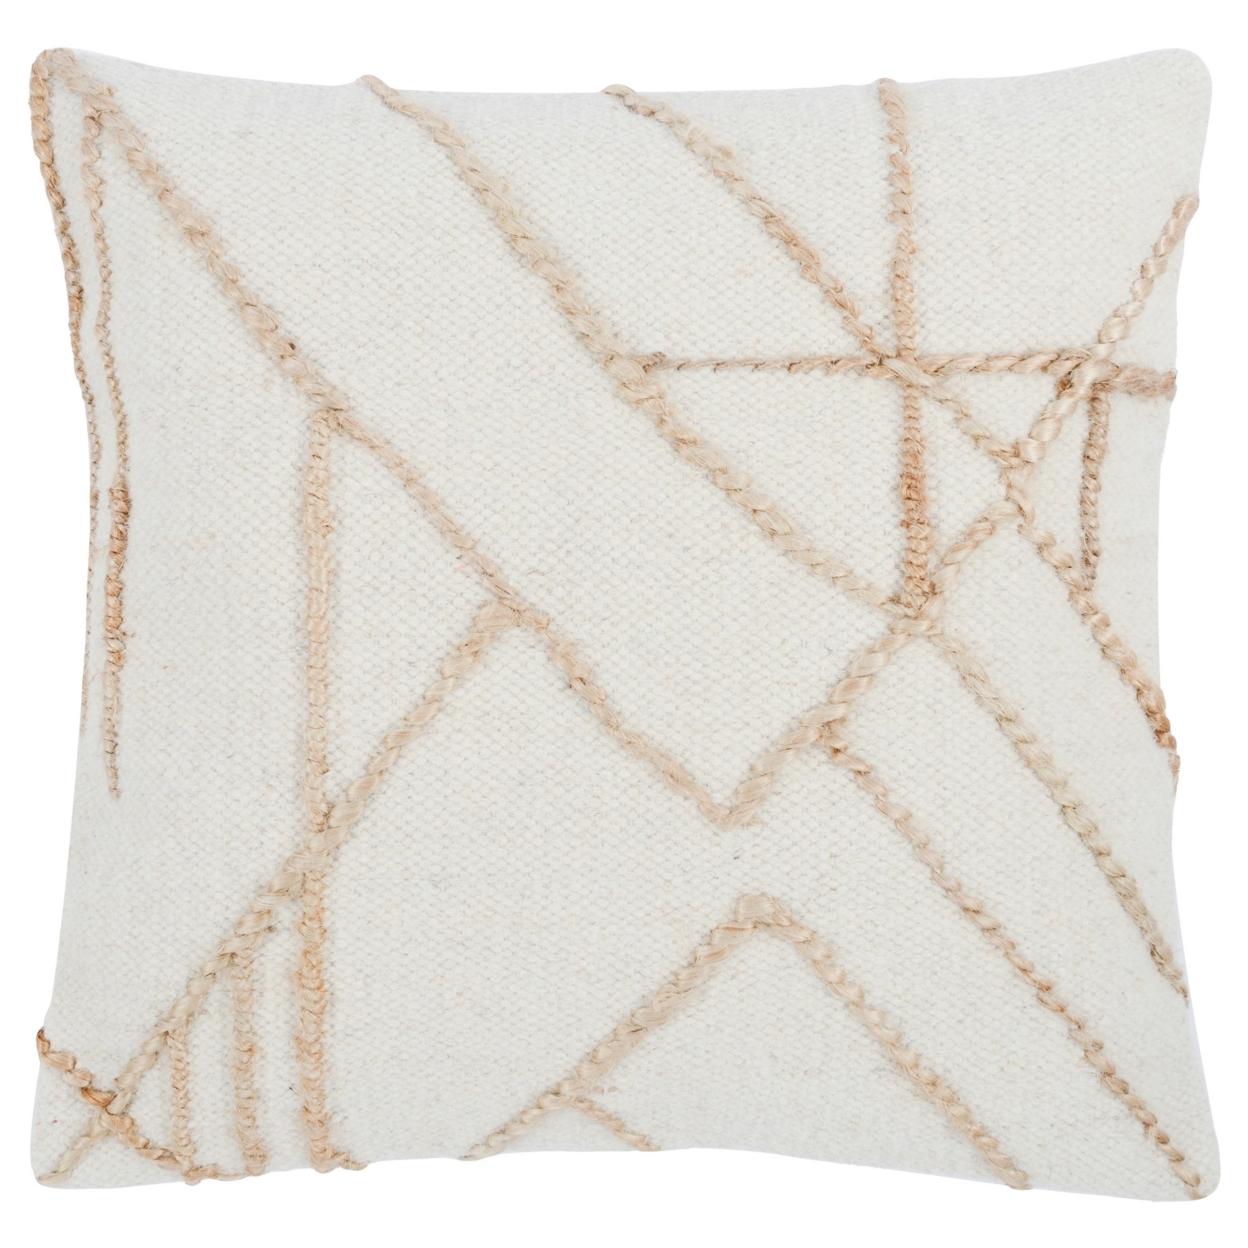 22 Inch Square Accent Throw Pillow, Jute Geometric Patterns, Wool, Ivory, Saltoro Sherpi